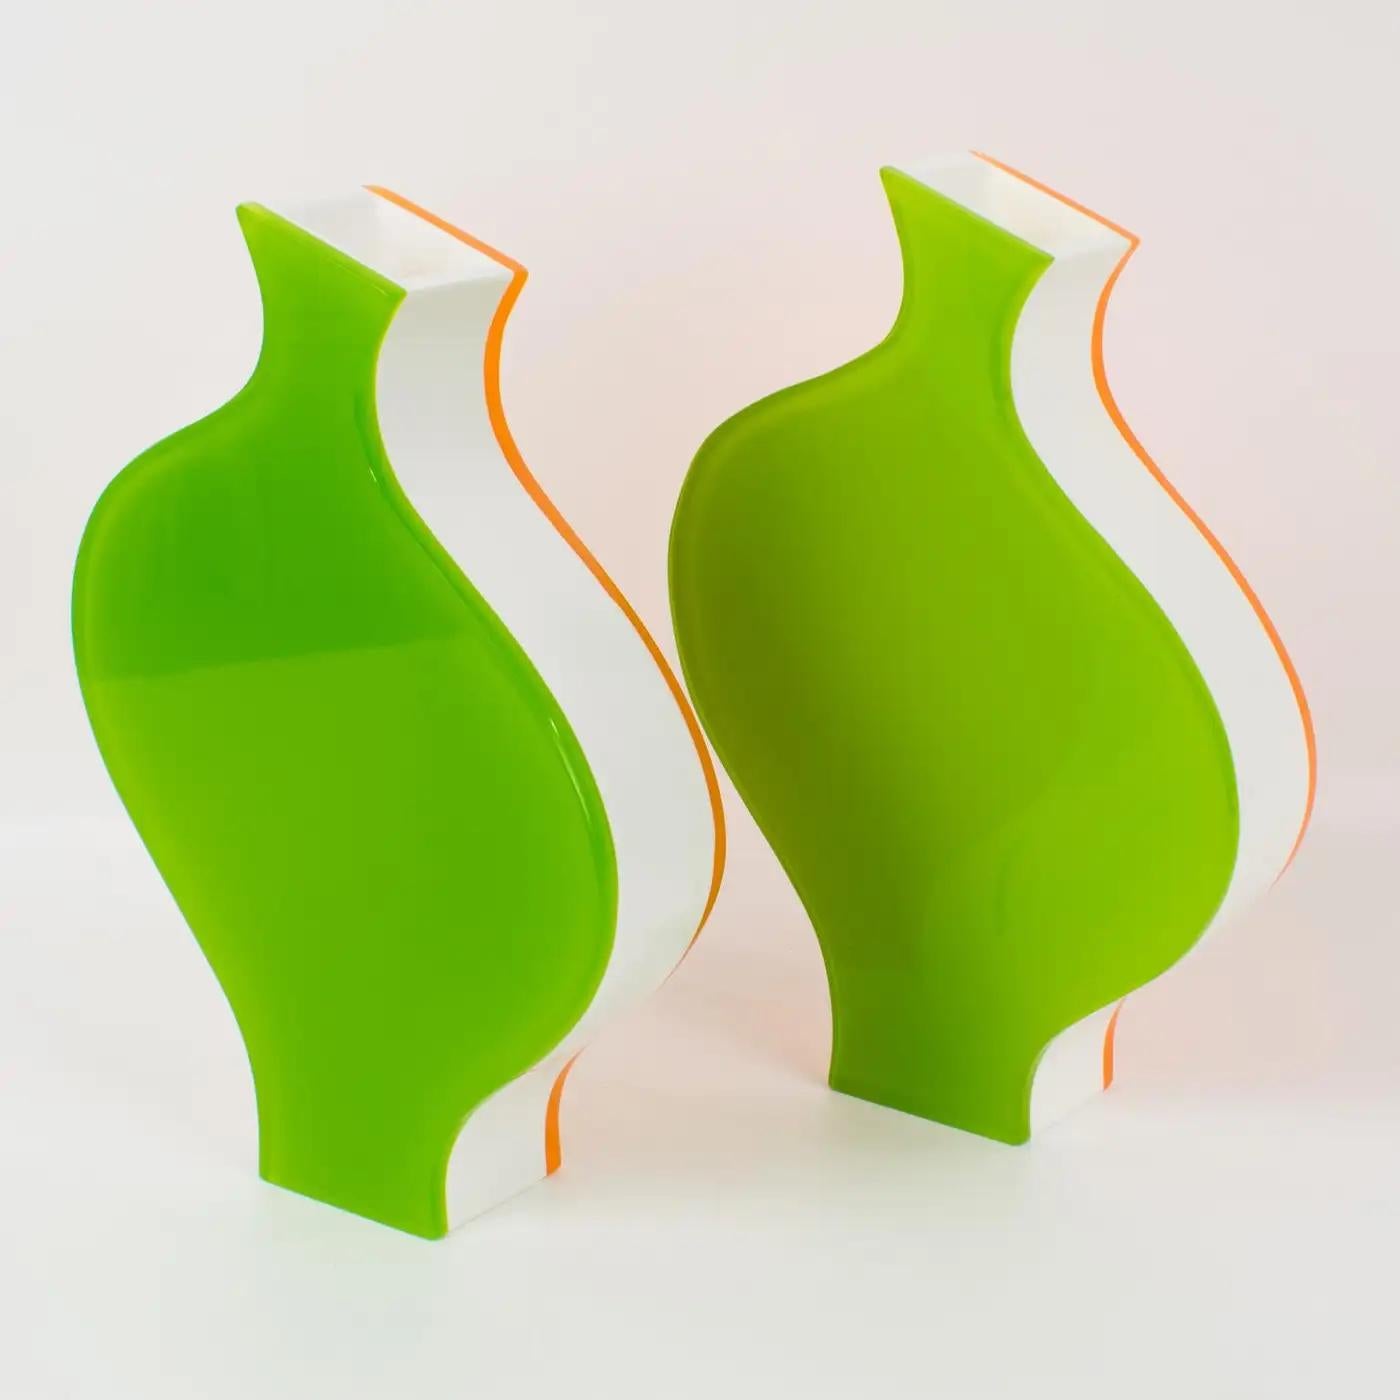 Villeroy & Boch Orange and Green Lucite Vases, 1990s For Sale 1